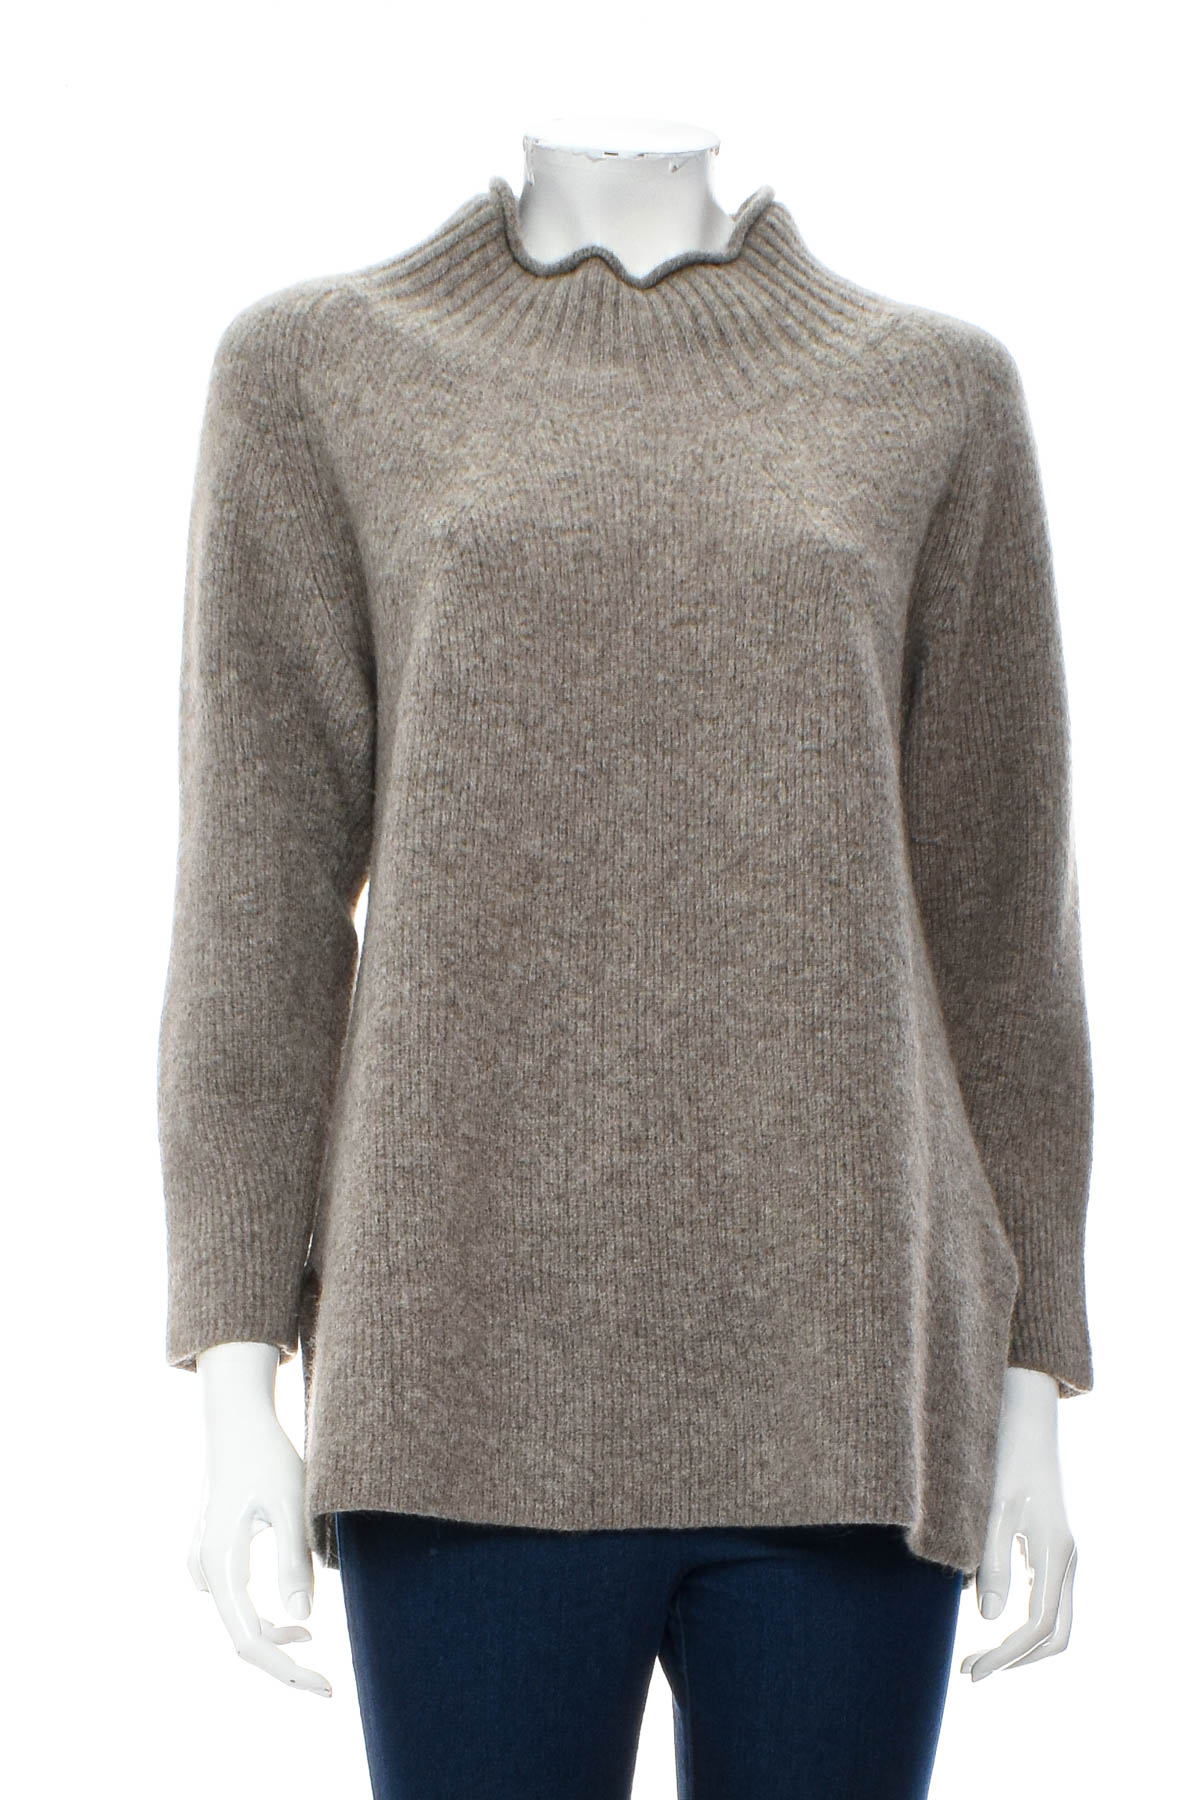 Women's sweater - Grune Erde - 0